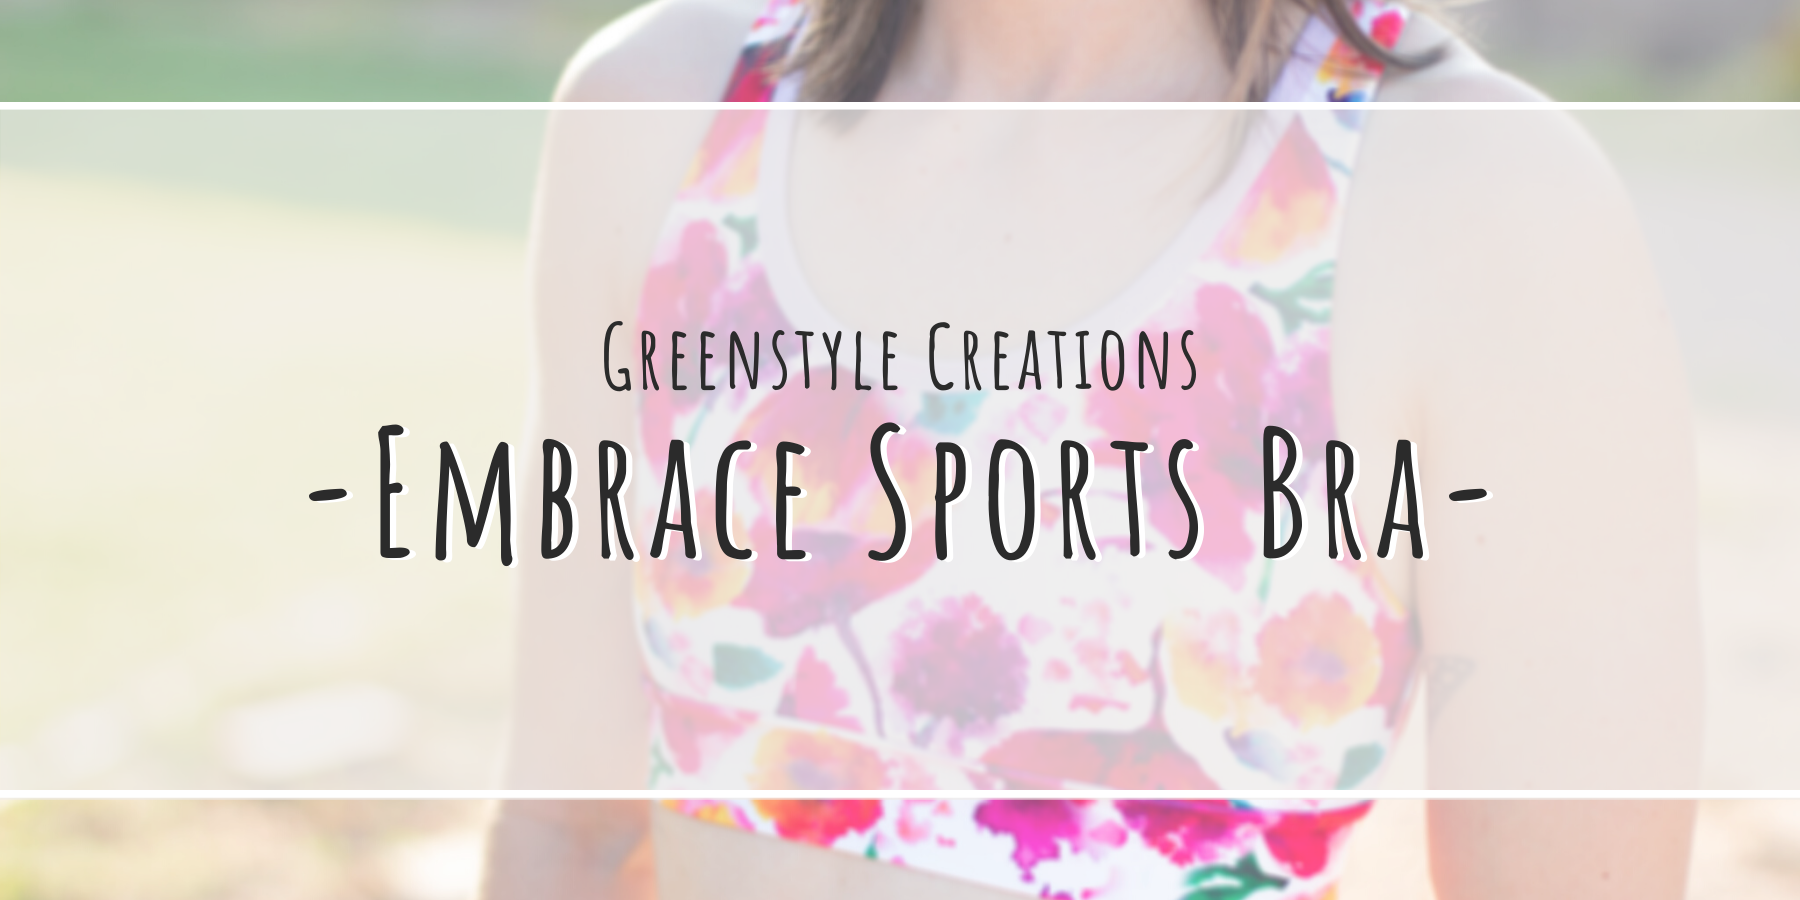 Greenstyle Embrace Sports Bra Sew Along – Sew a Bra with Me